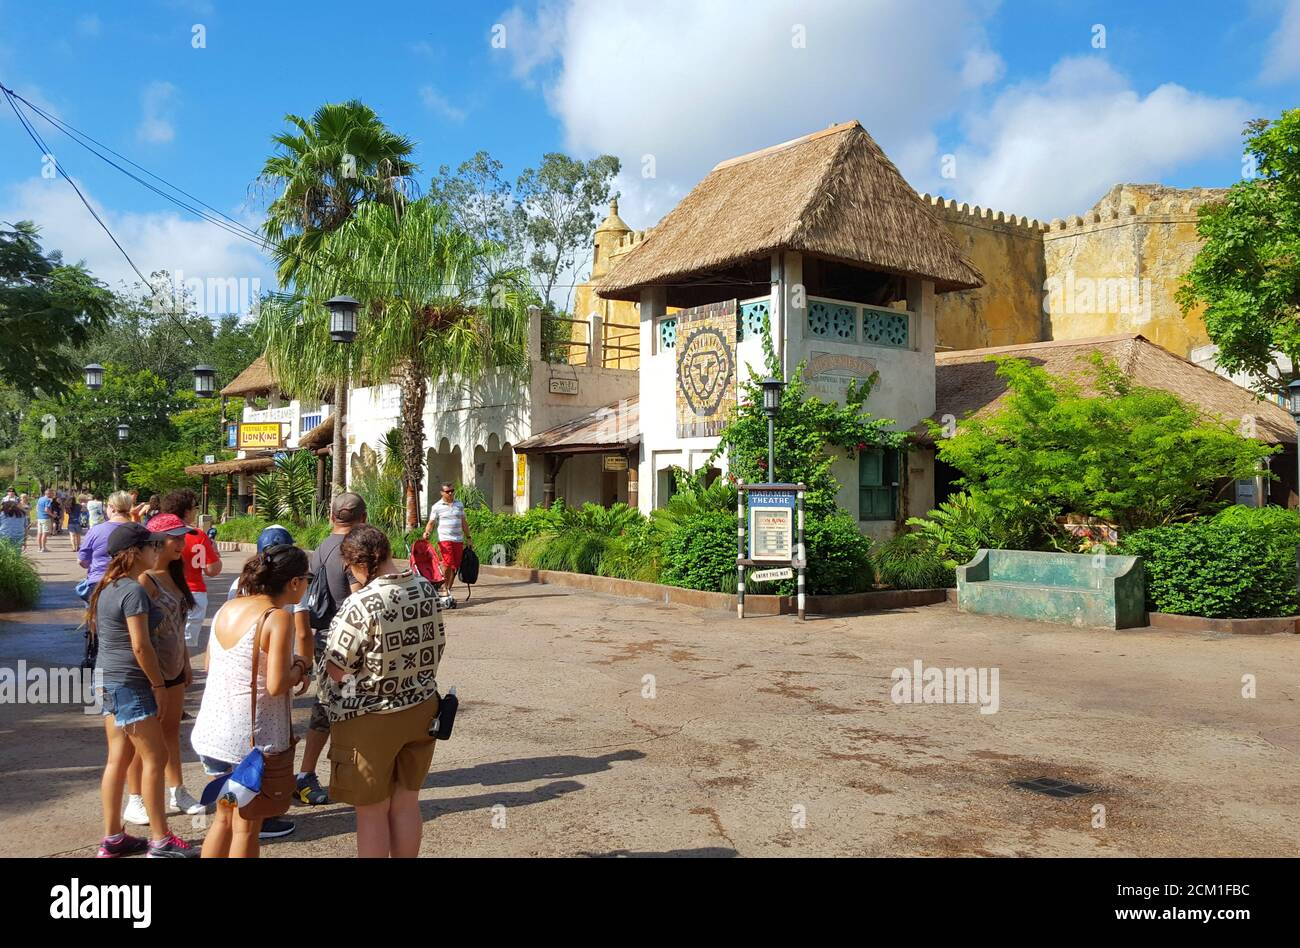 Harambe Theatre area, Animal Kingdom, Walt Disney World, Orlanda, Florida, United States Stock Photo